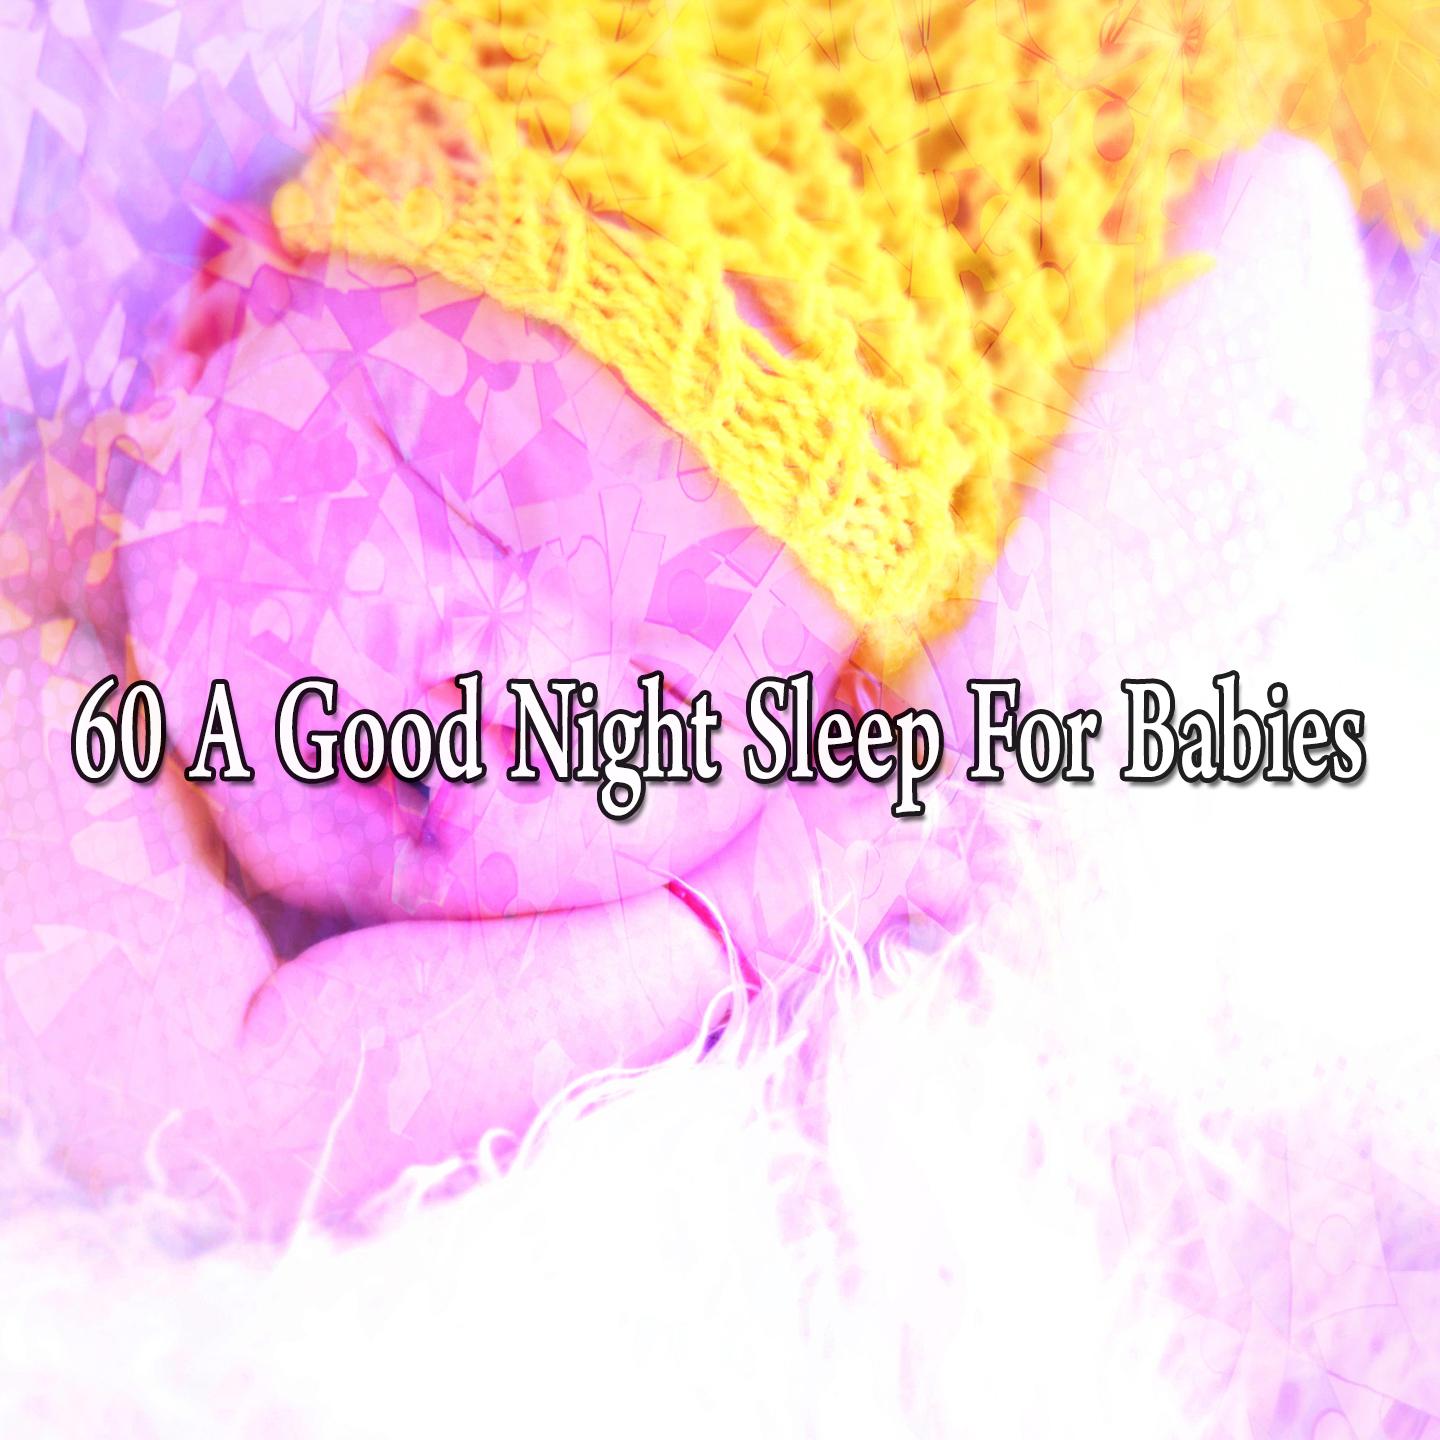 60 A Good Night Sleep for Babies